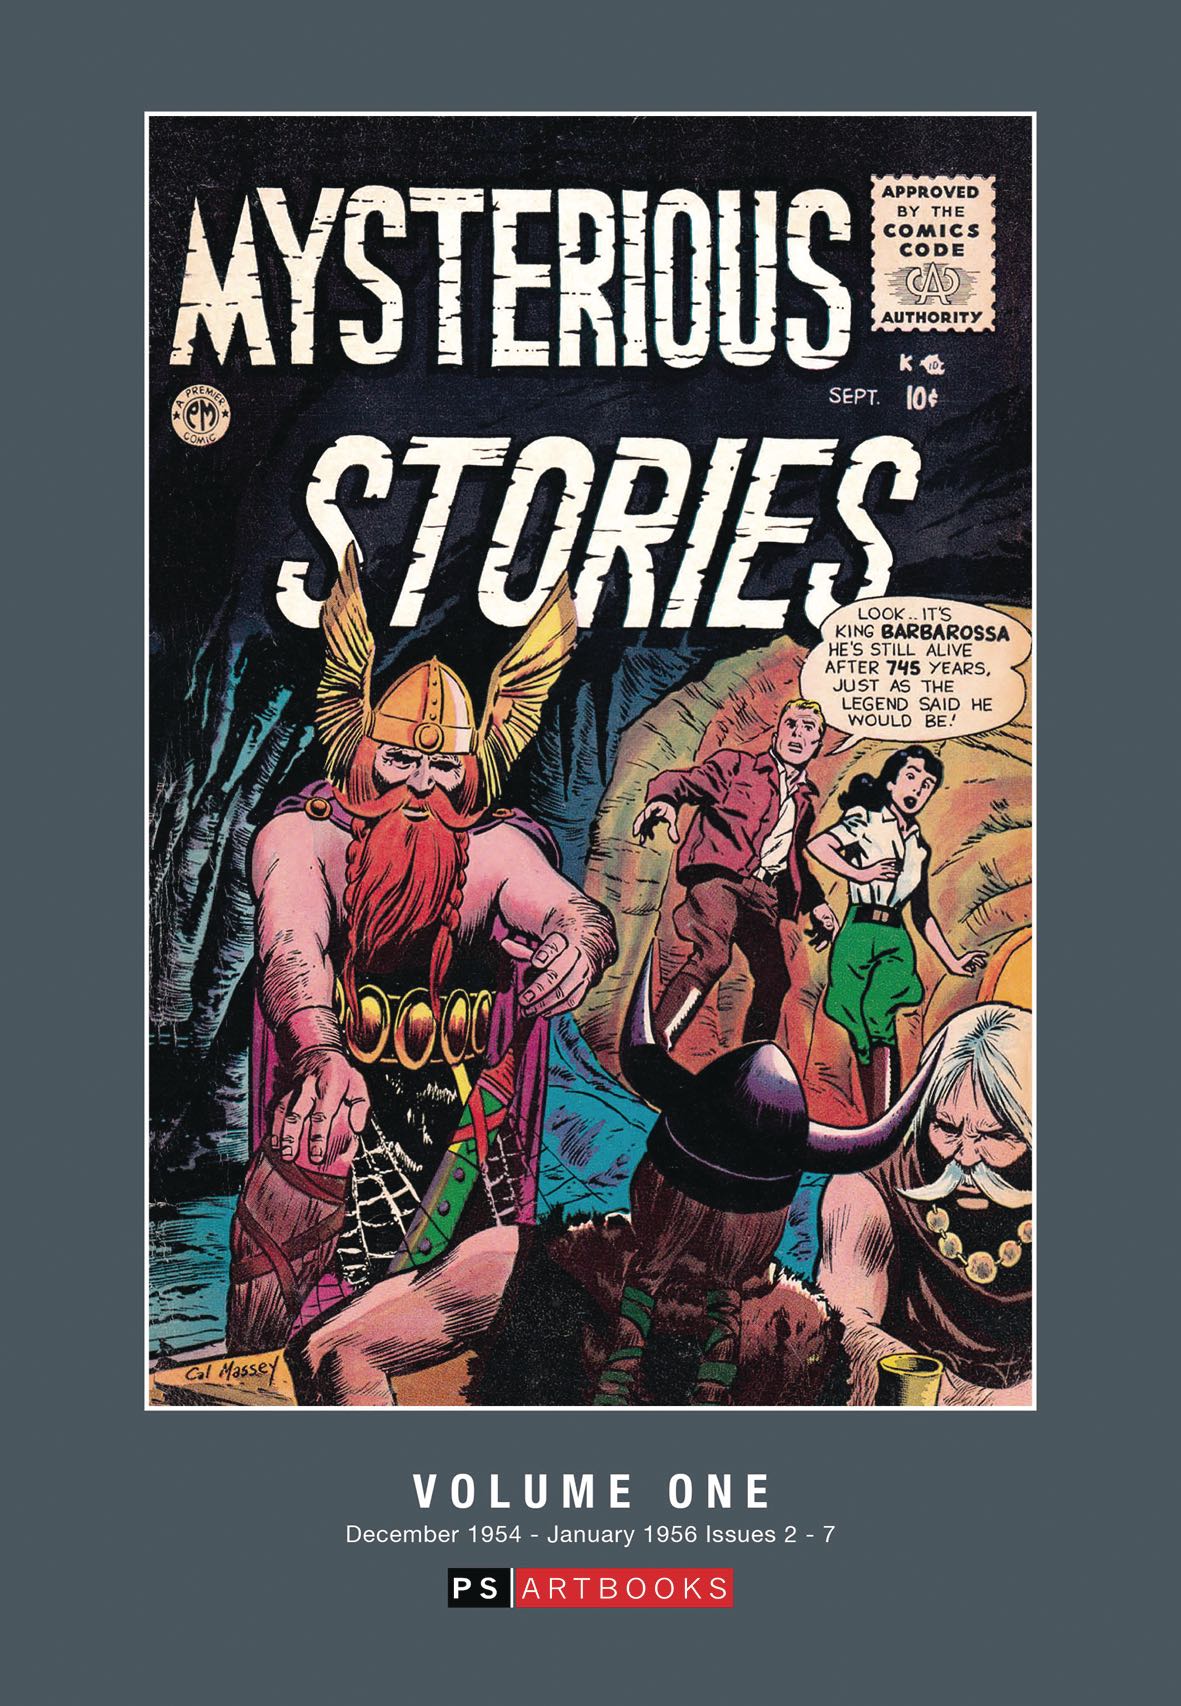 Mysterious Stories Vol. 1 | Fresh Comics